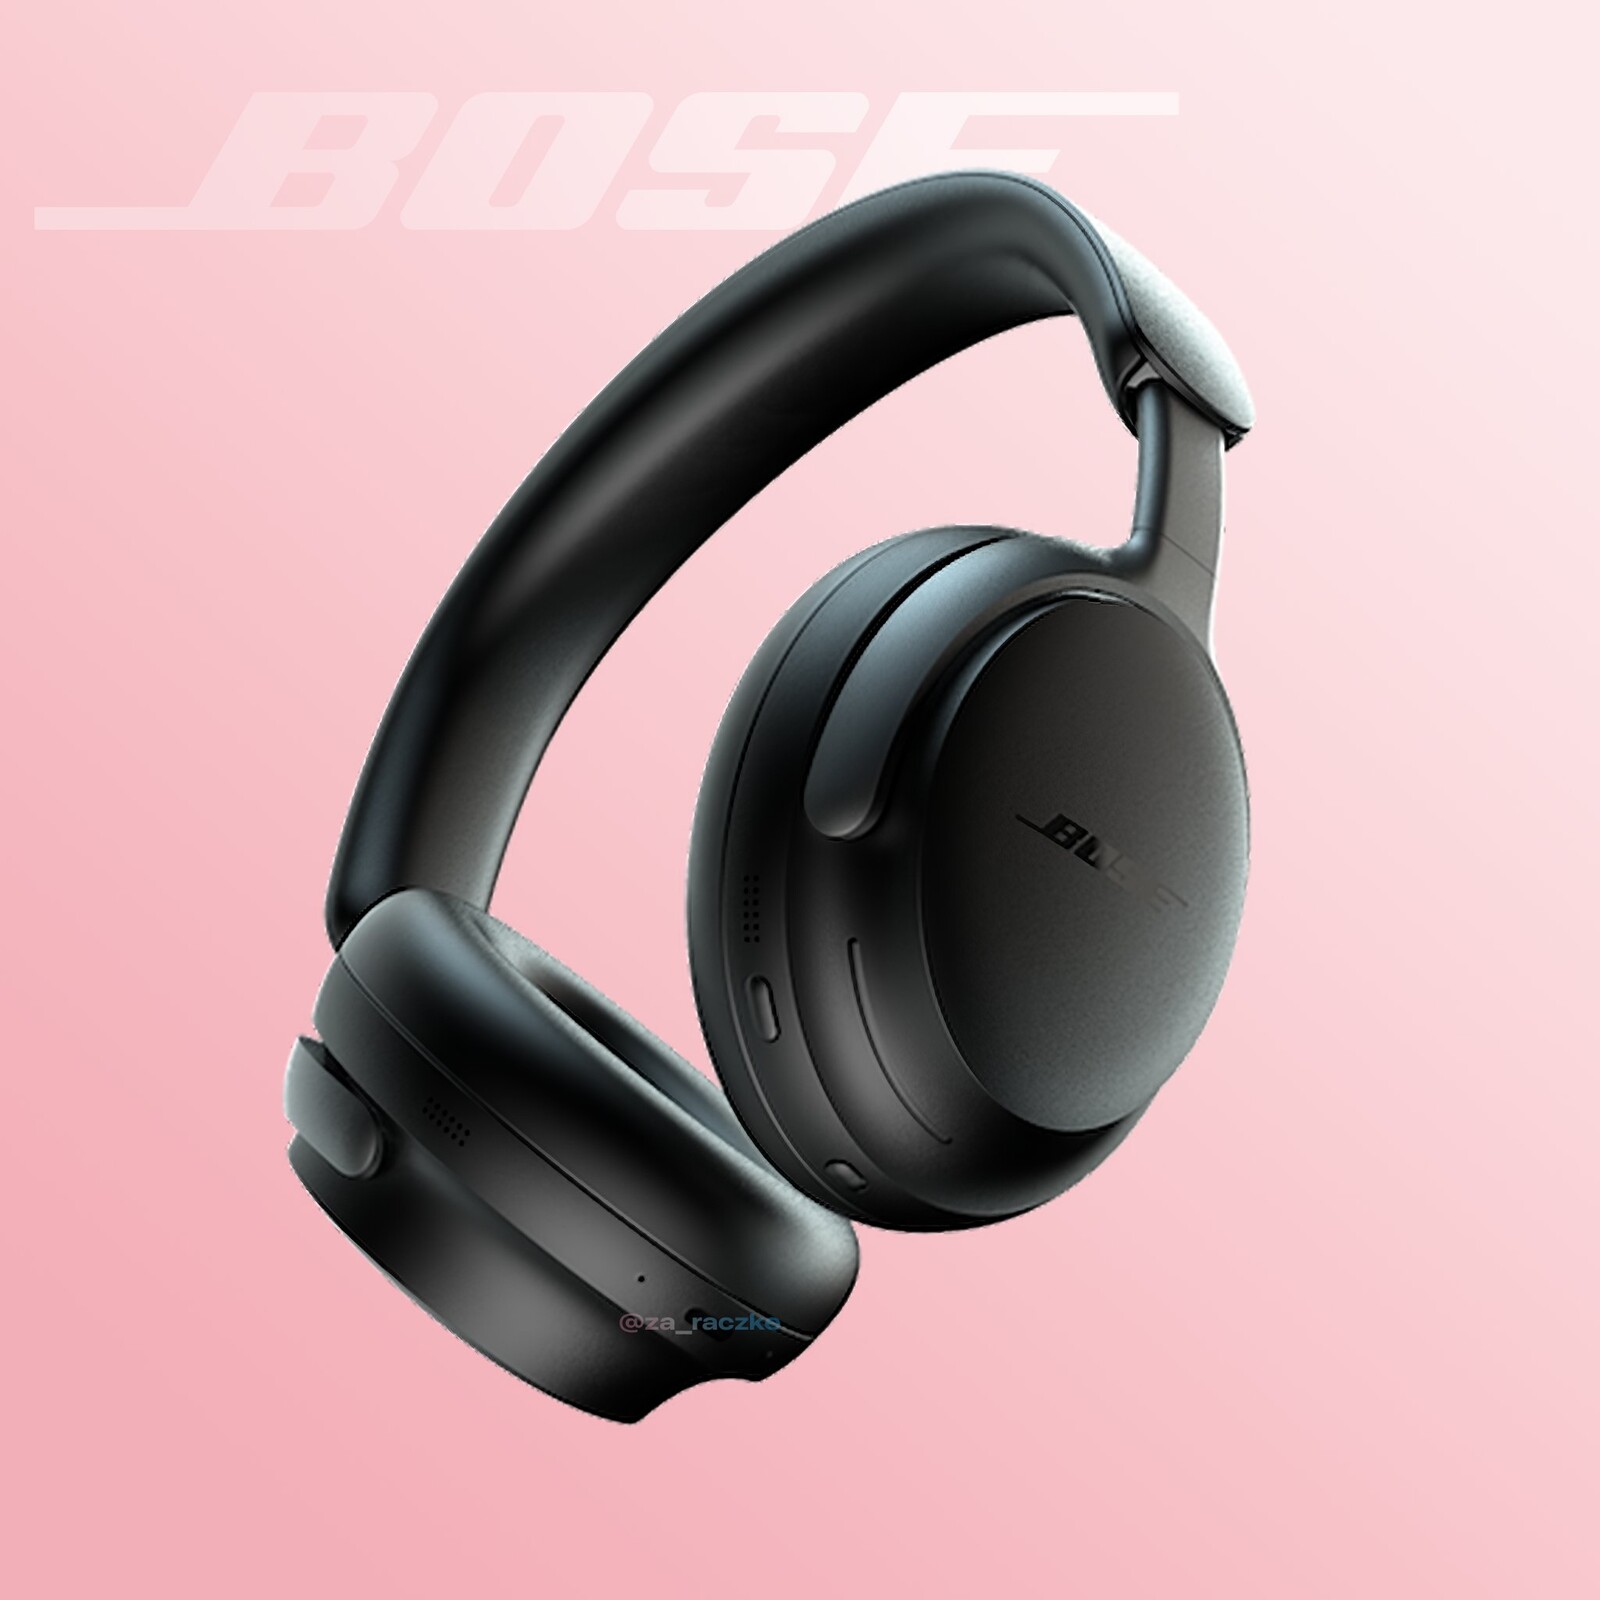 Bose QuietComfort Ultra leak showcases new flagship ANC headphones